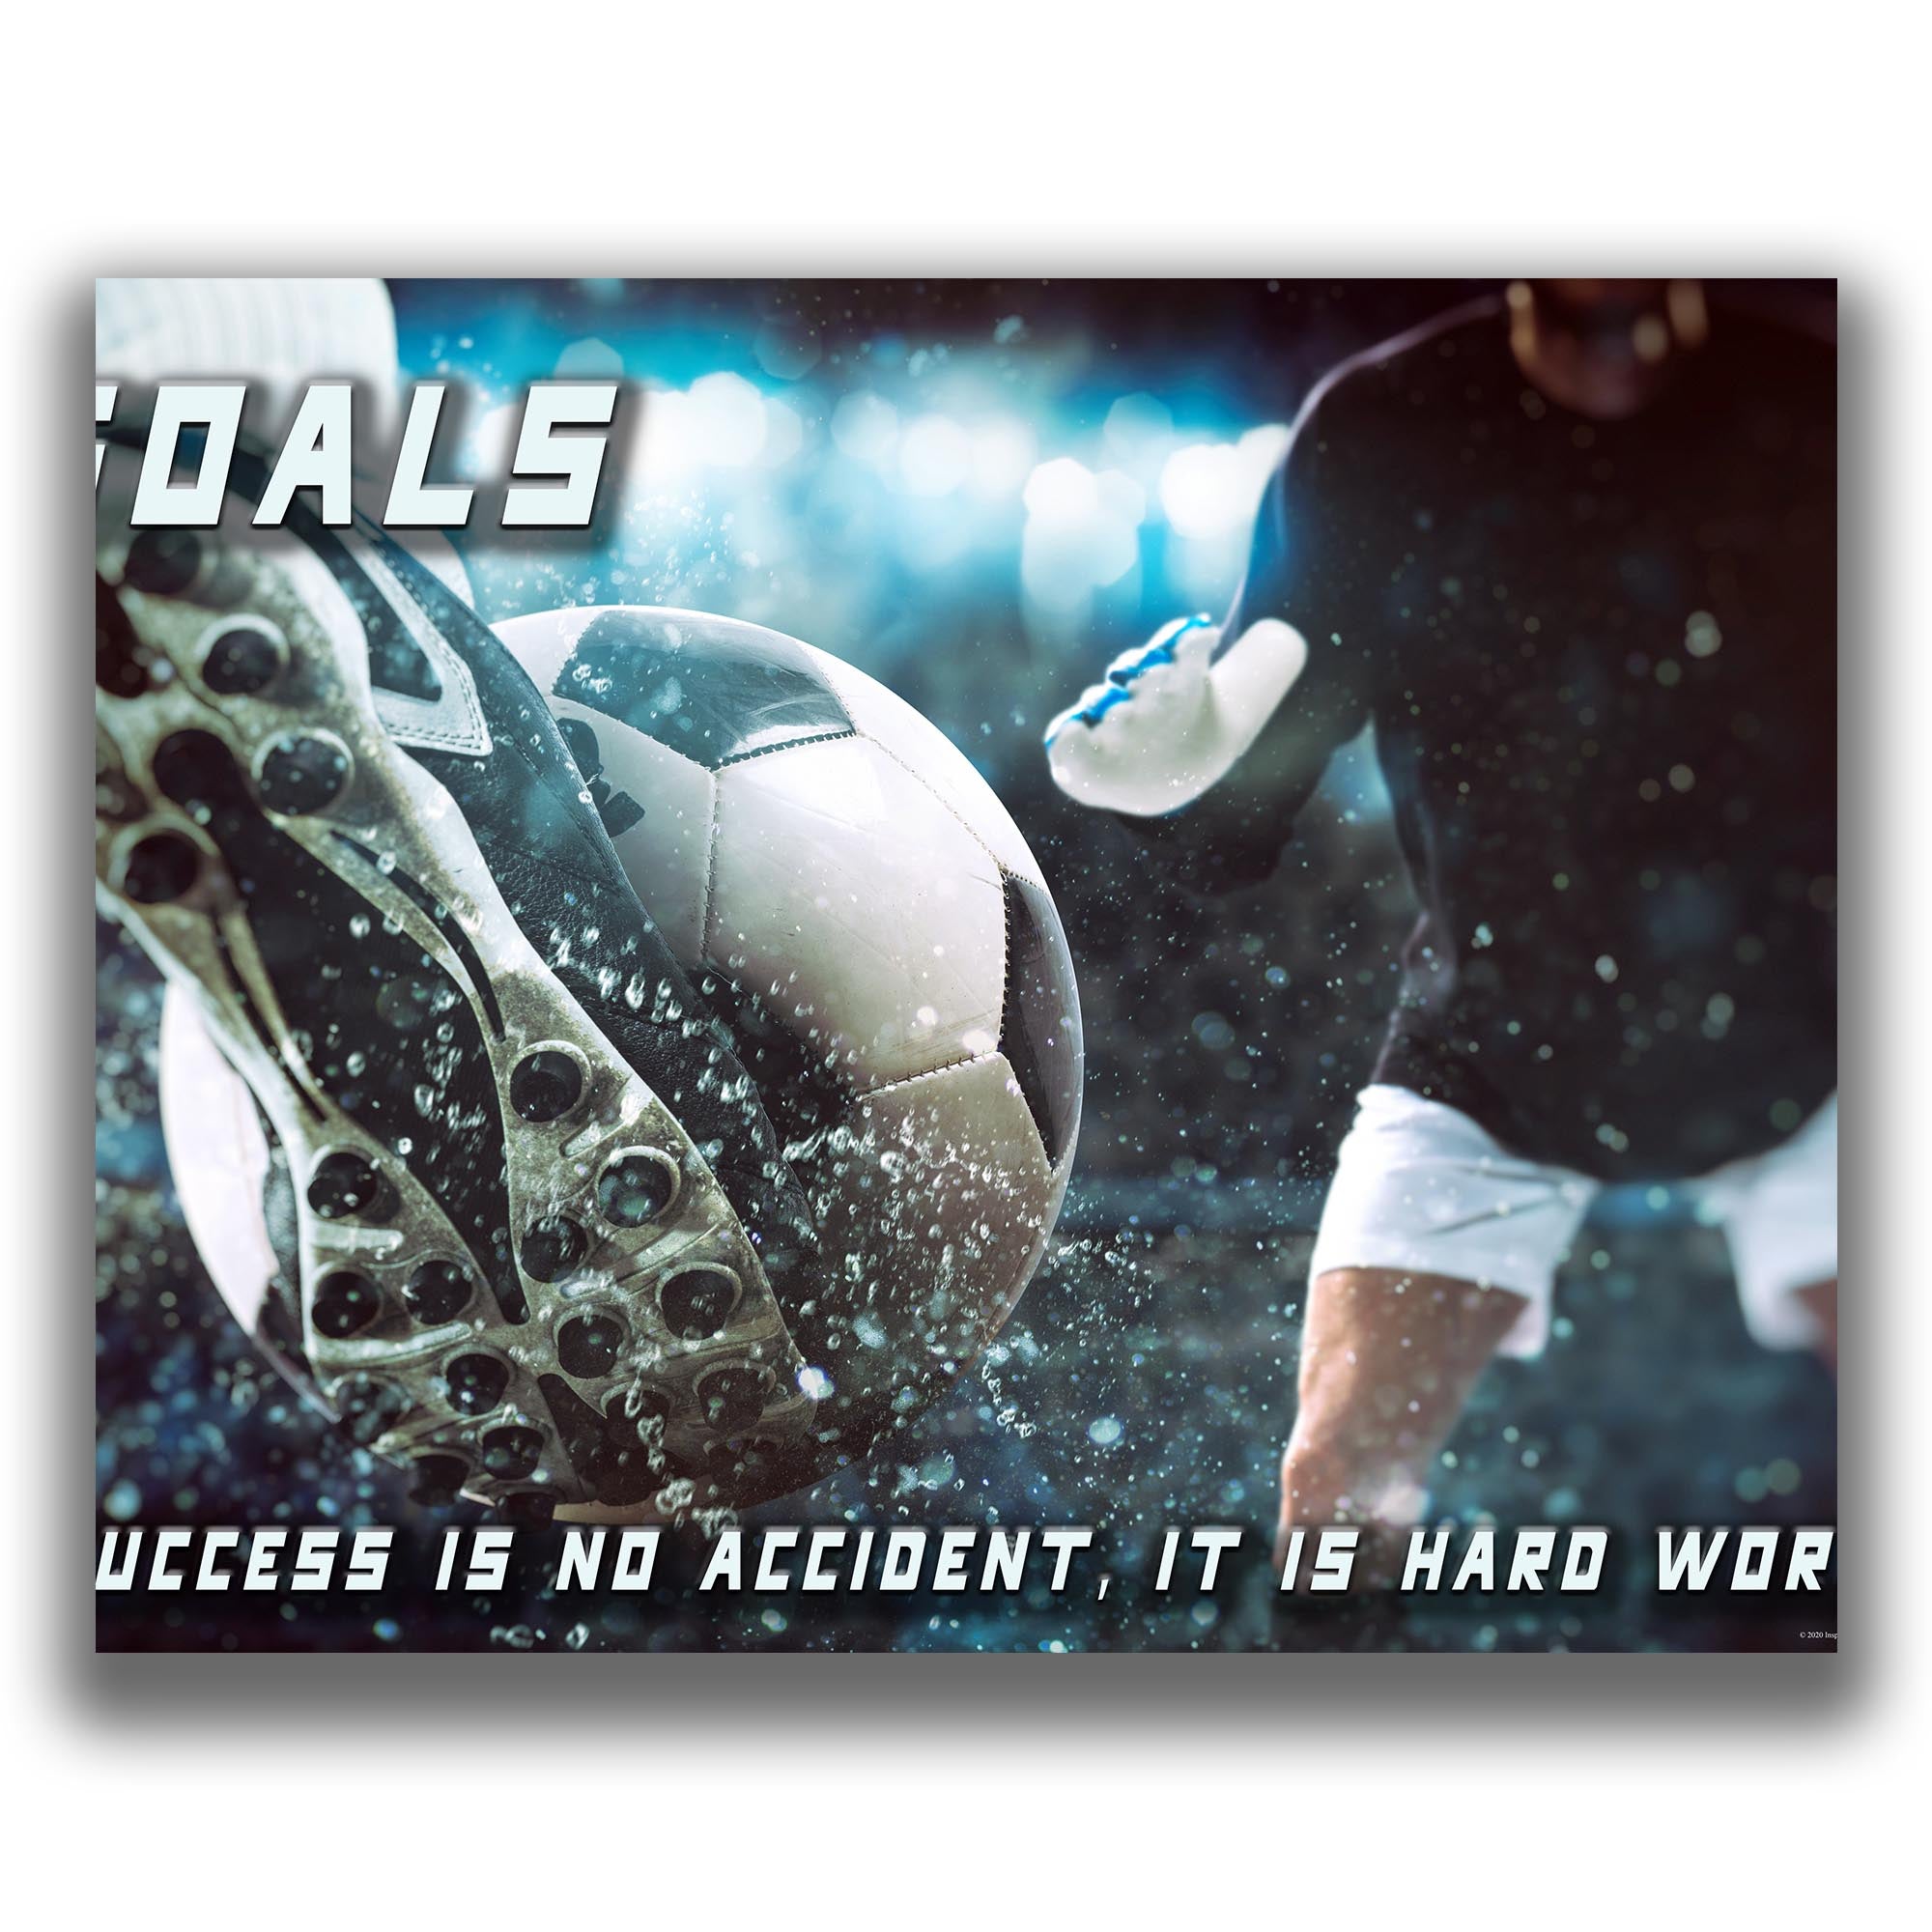 Goals - Soccer Poster